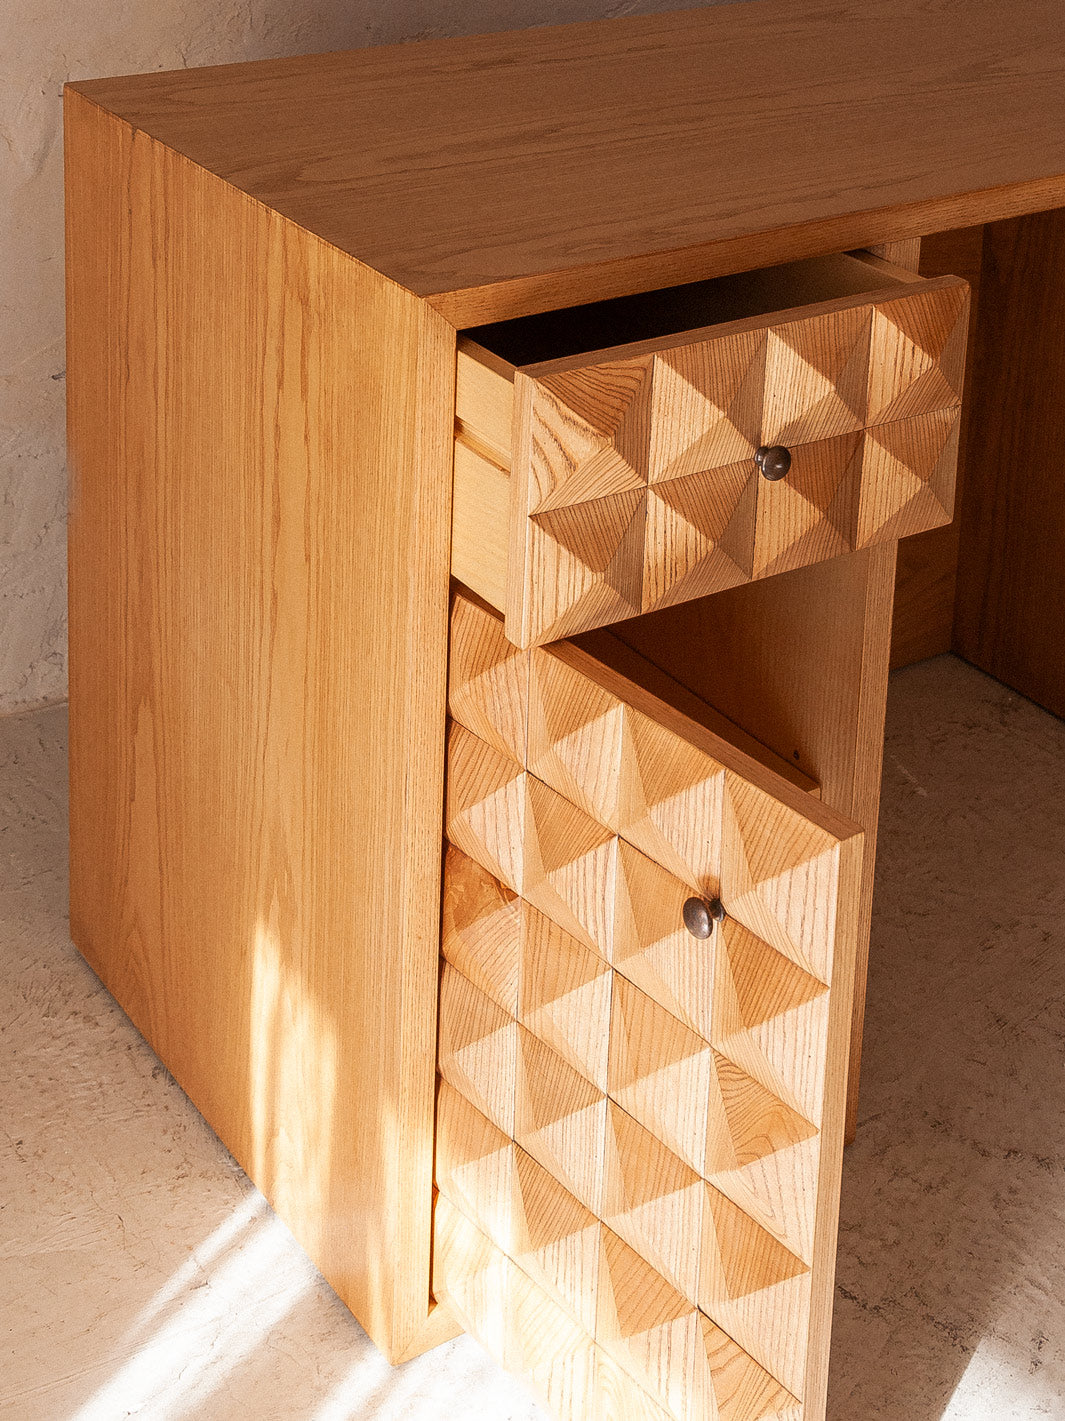 Italian fresno wood desk with squares